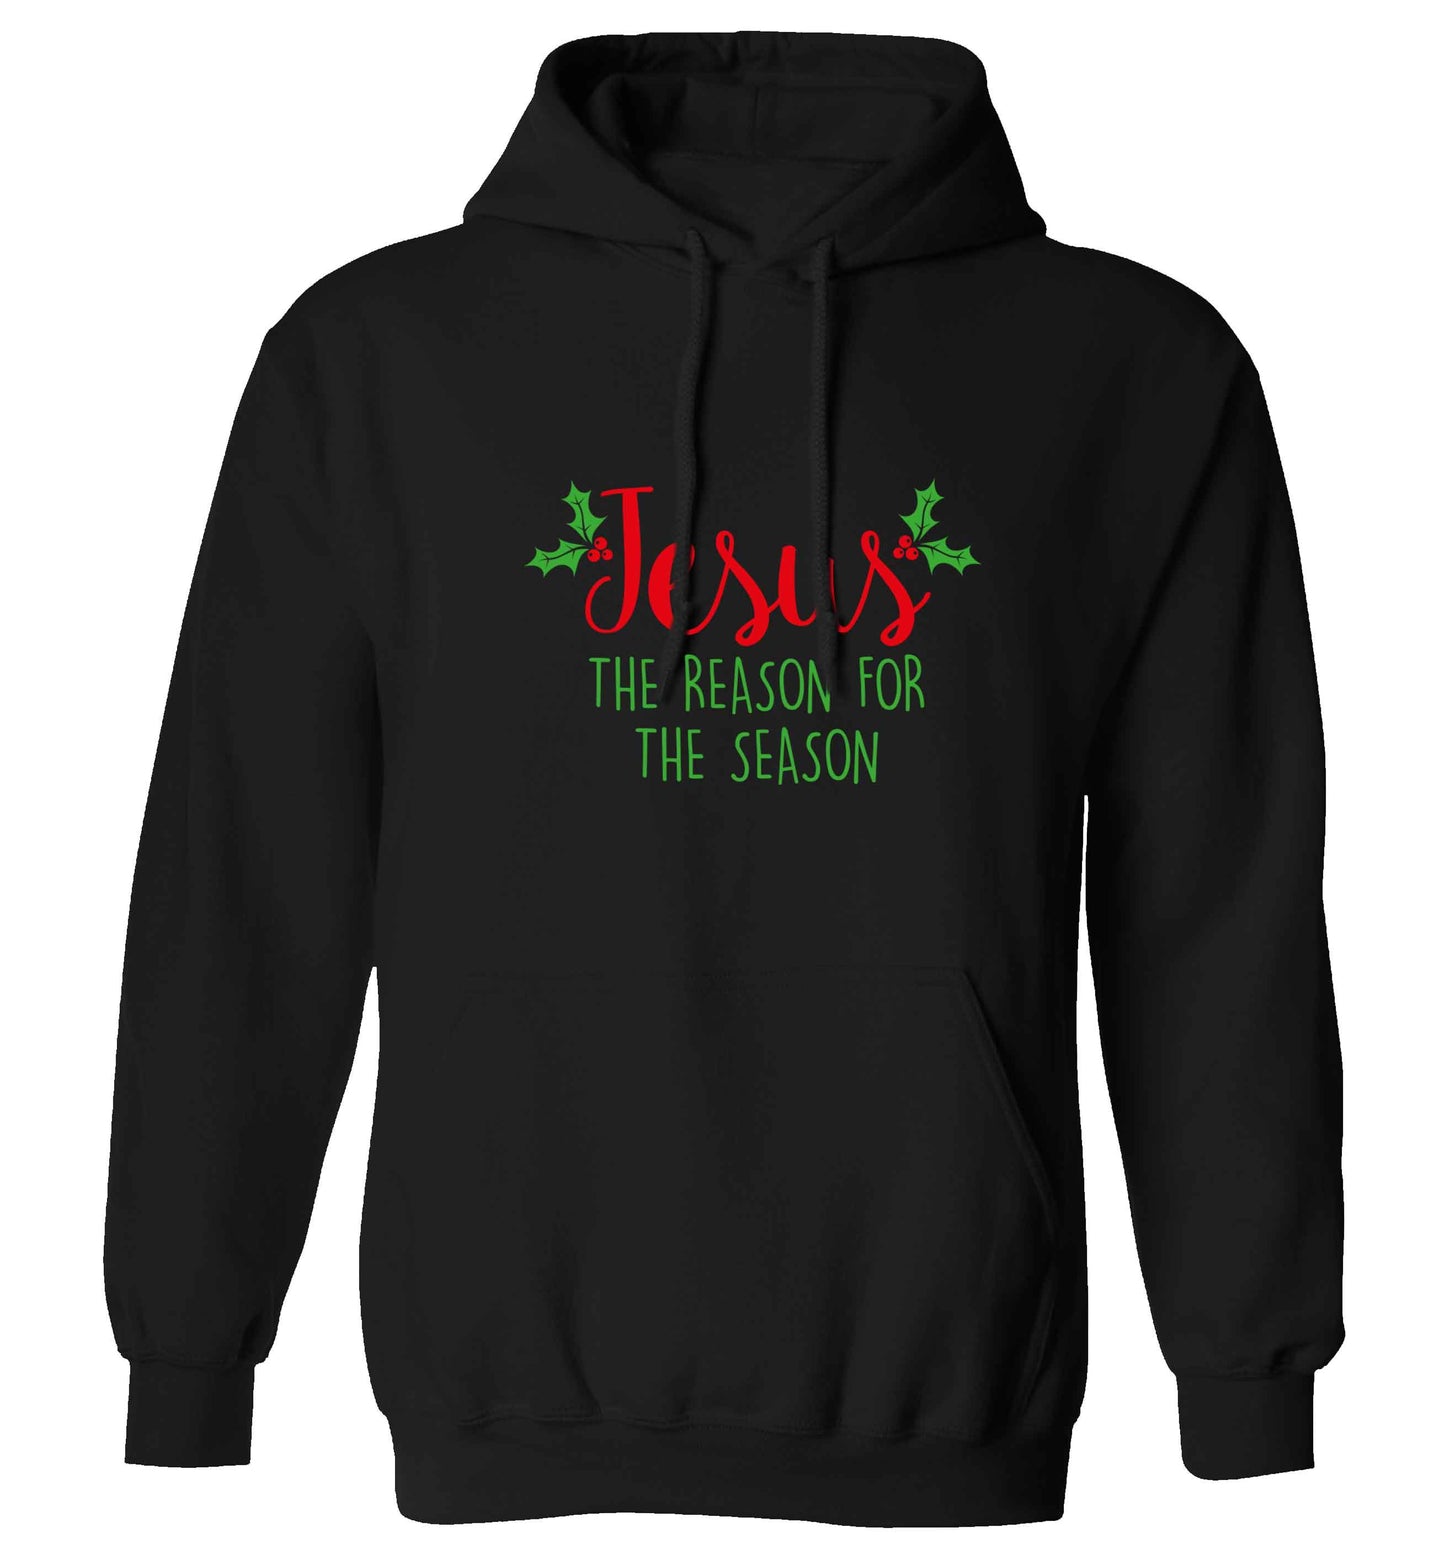 Jesus the reason for the season adults unisex black hoodie 2XL